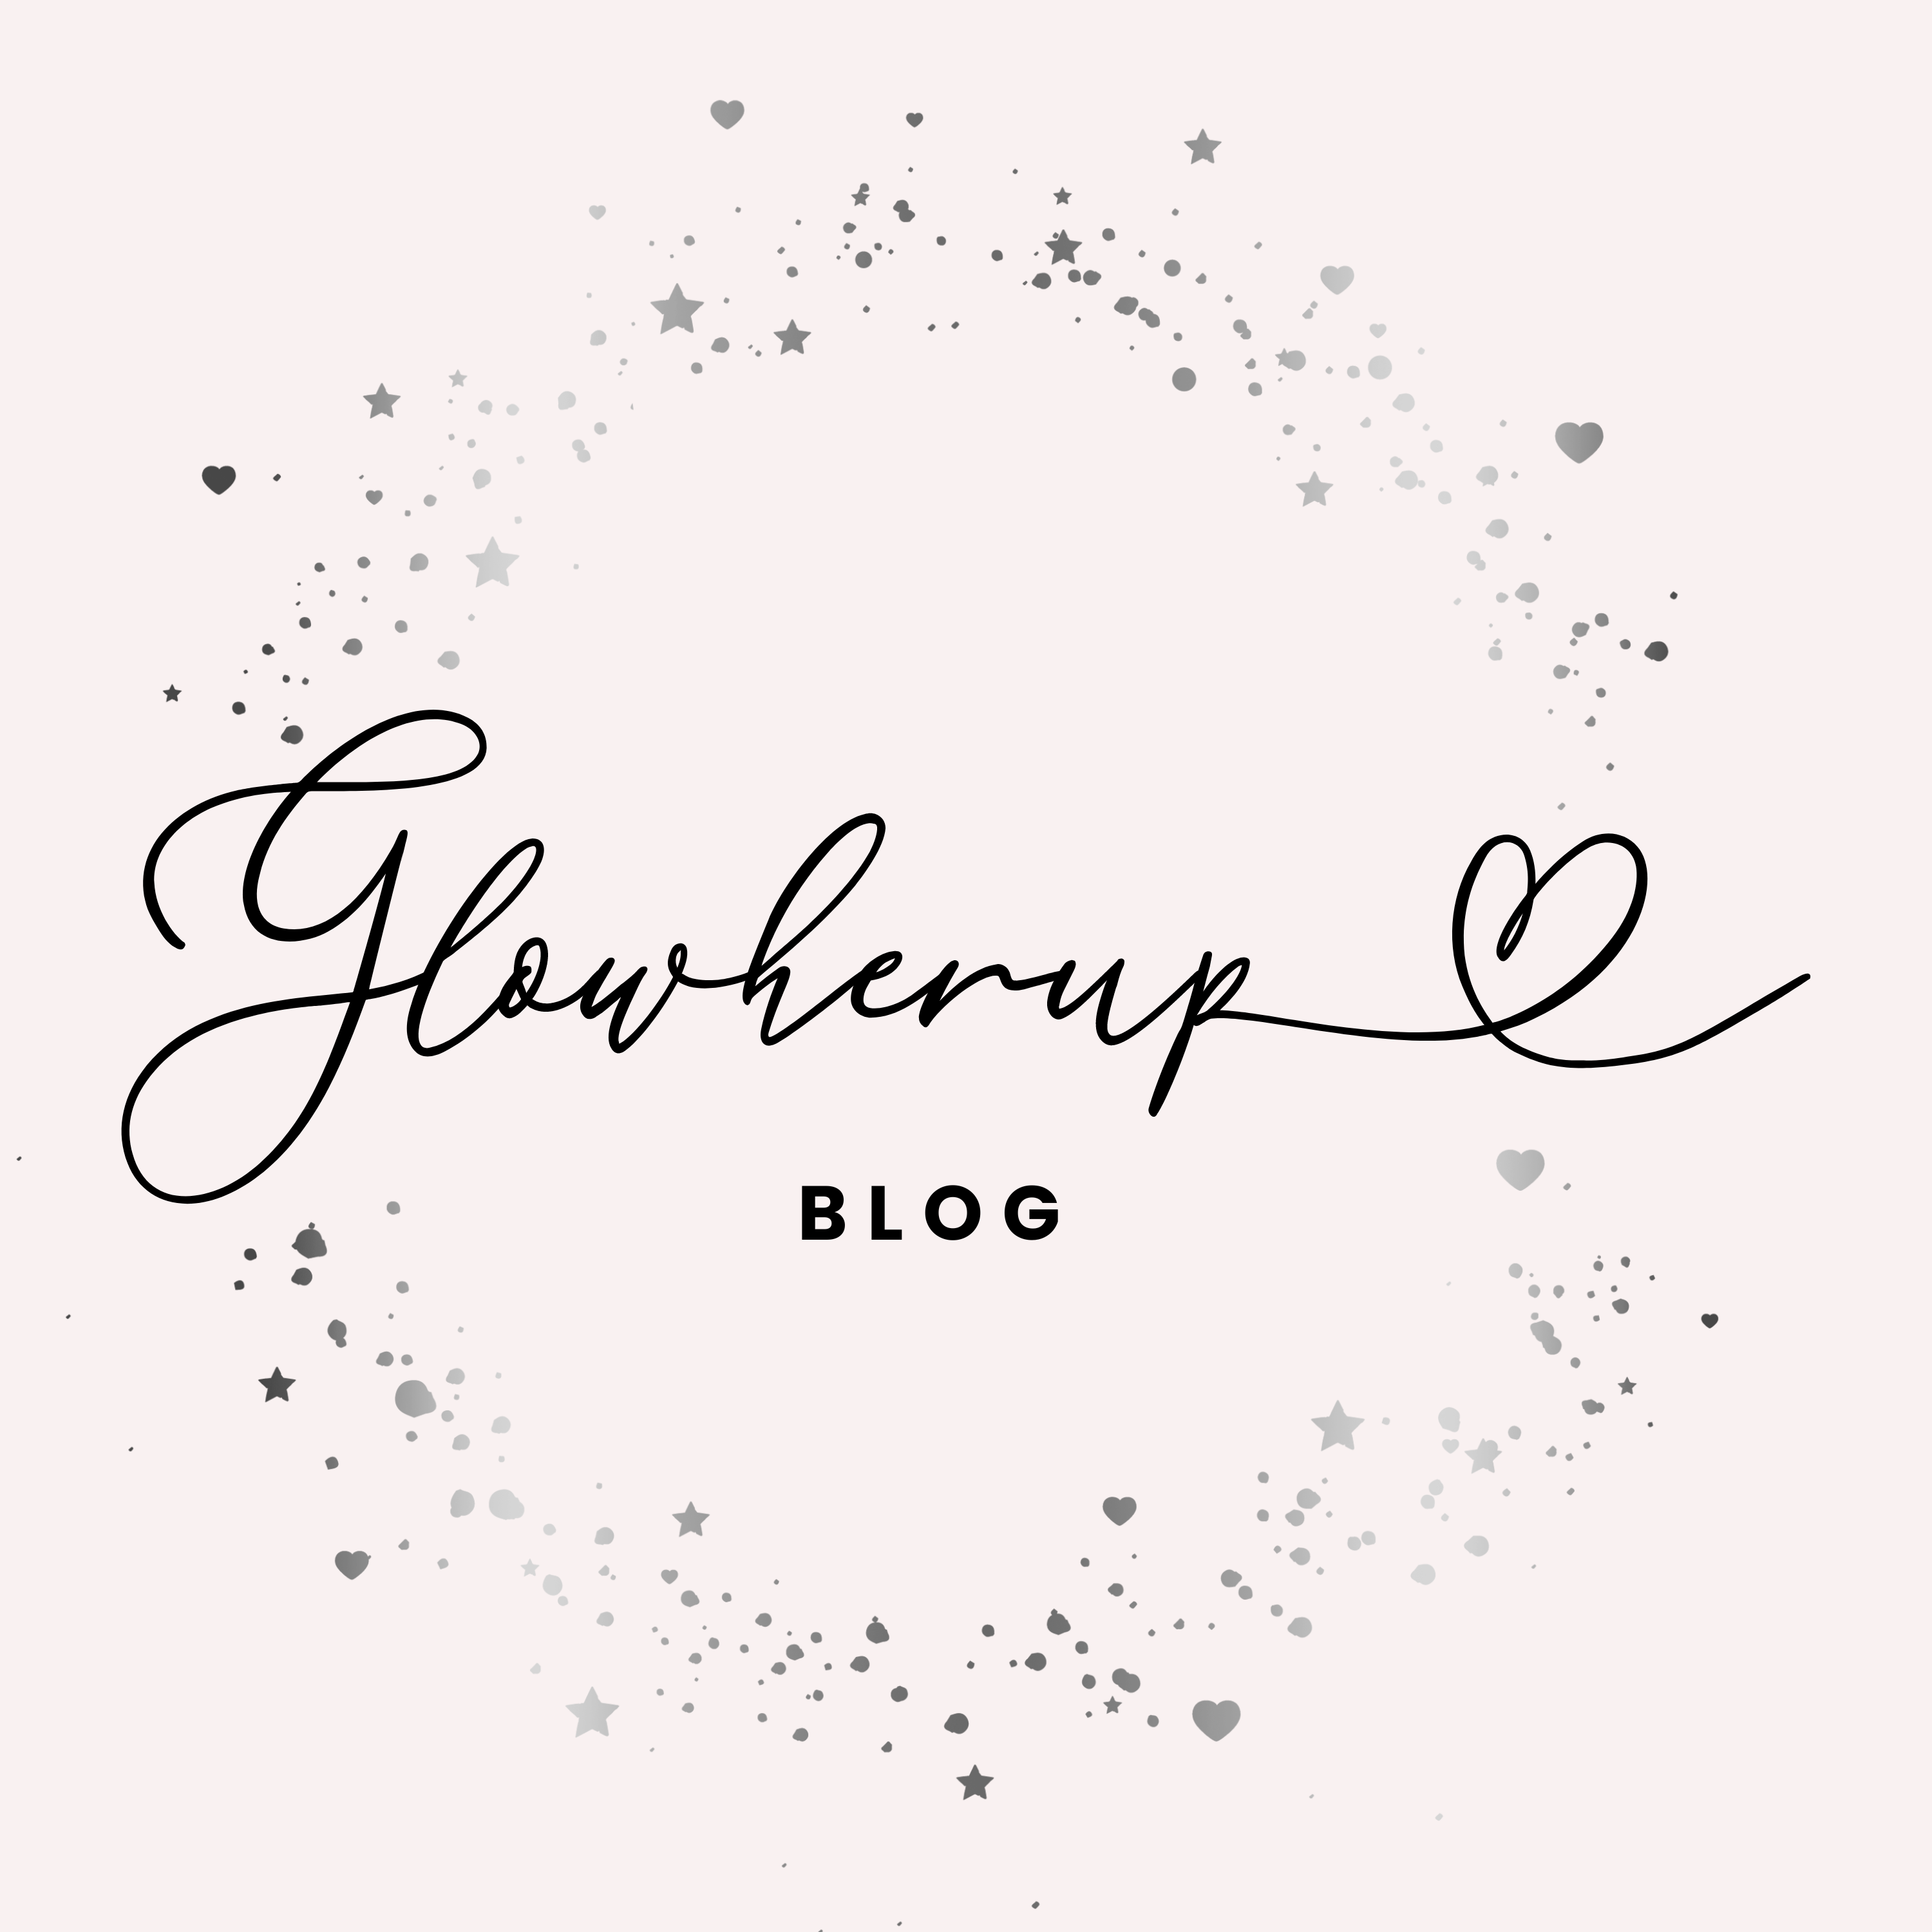 glowherupblog